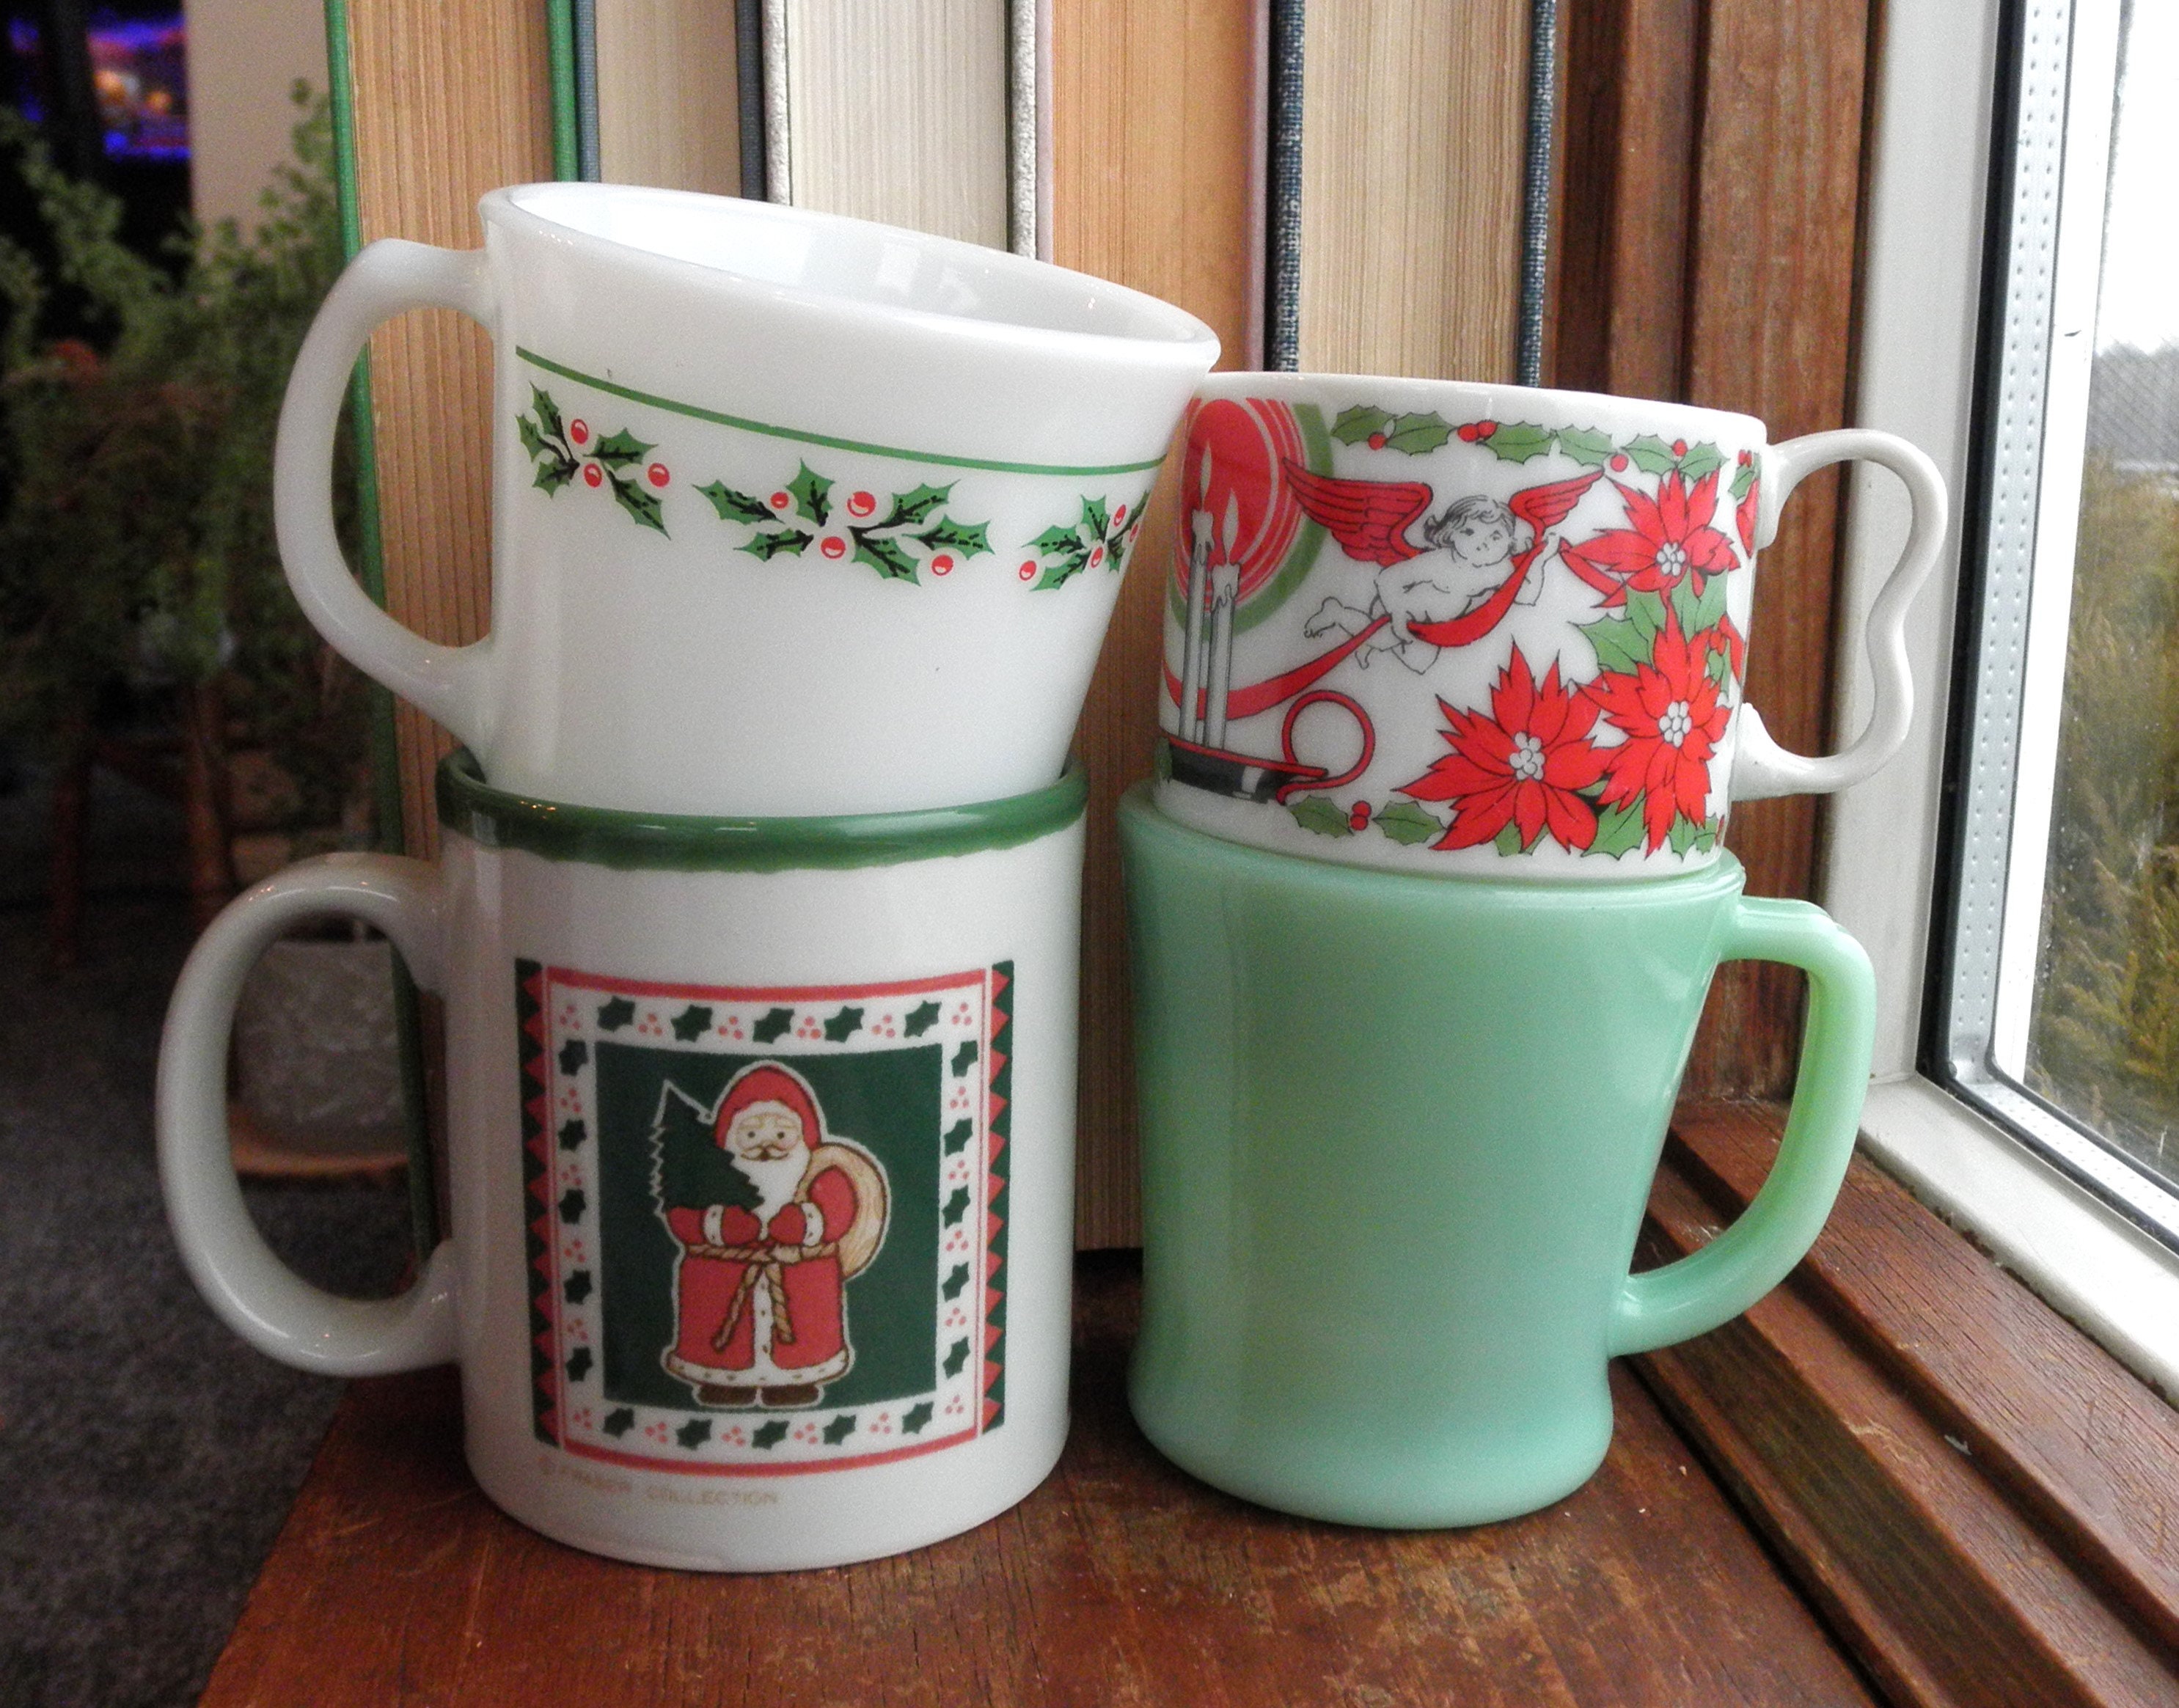 Haptime Vintage Coffee Mugs, Cute Coffee Mug, 14oz, Glass Mug - mugginns